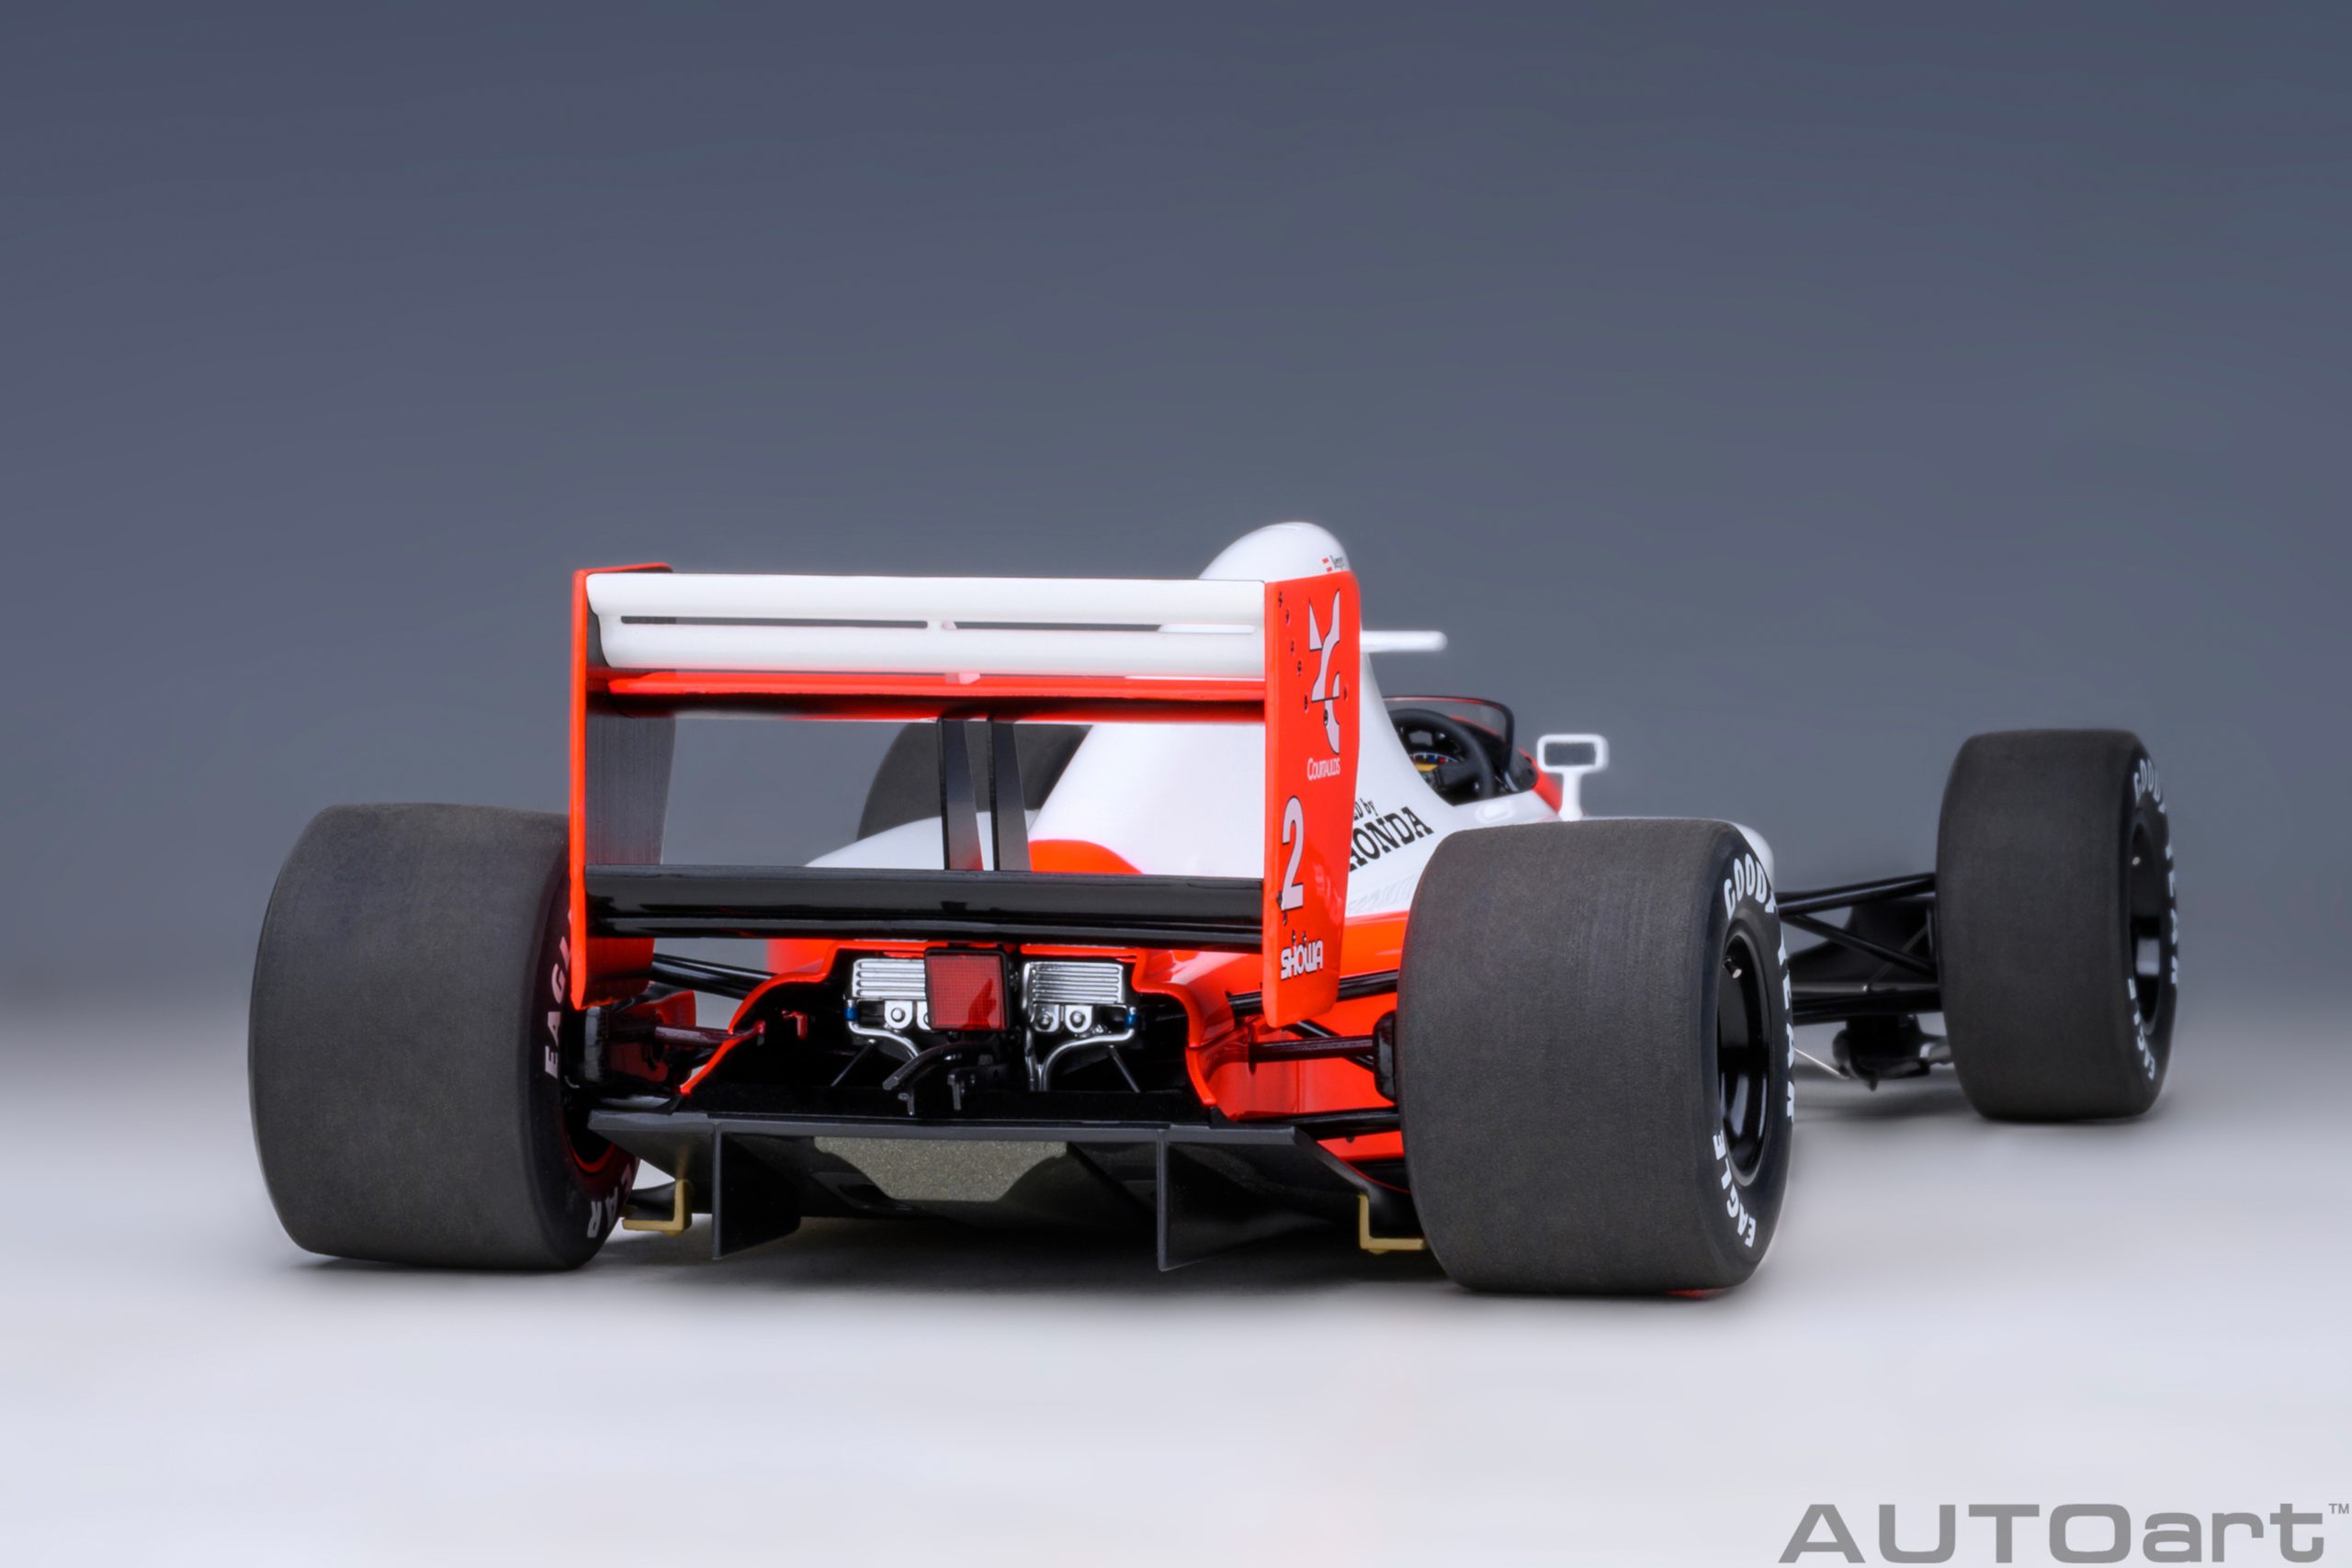 autoart-89152-9-McLaren-Honda-MP4-6-Gerhard-Berger-Japanese-GP-1991-white-version-Diffusor